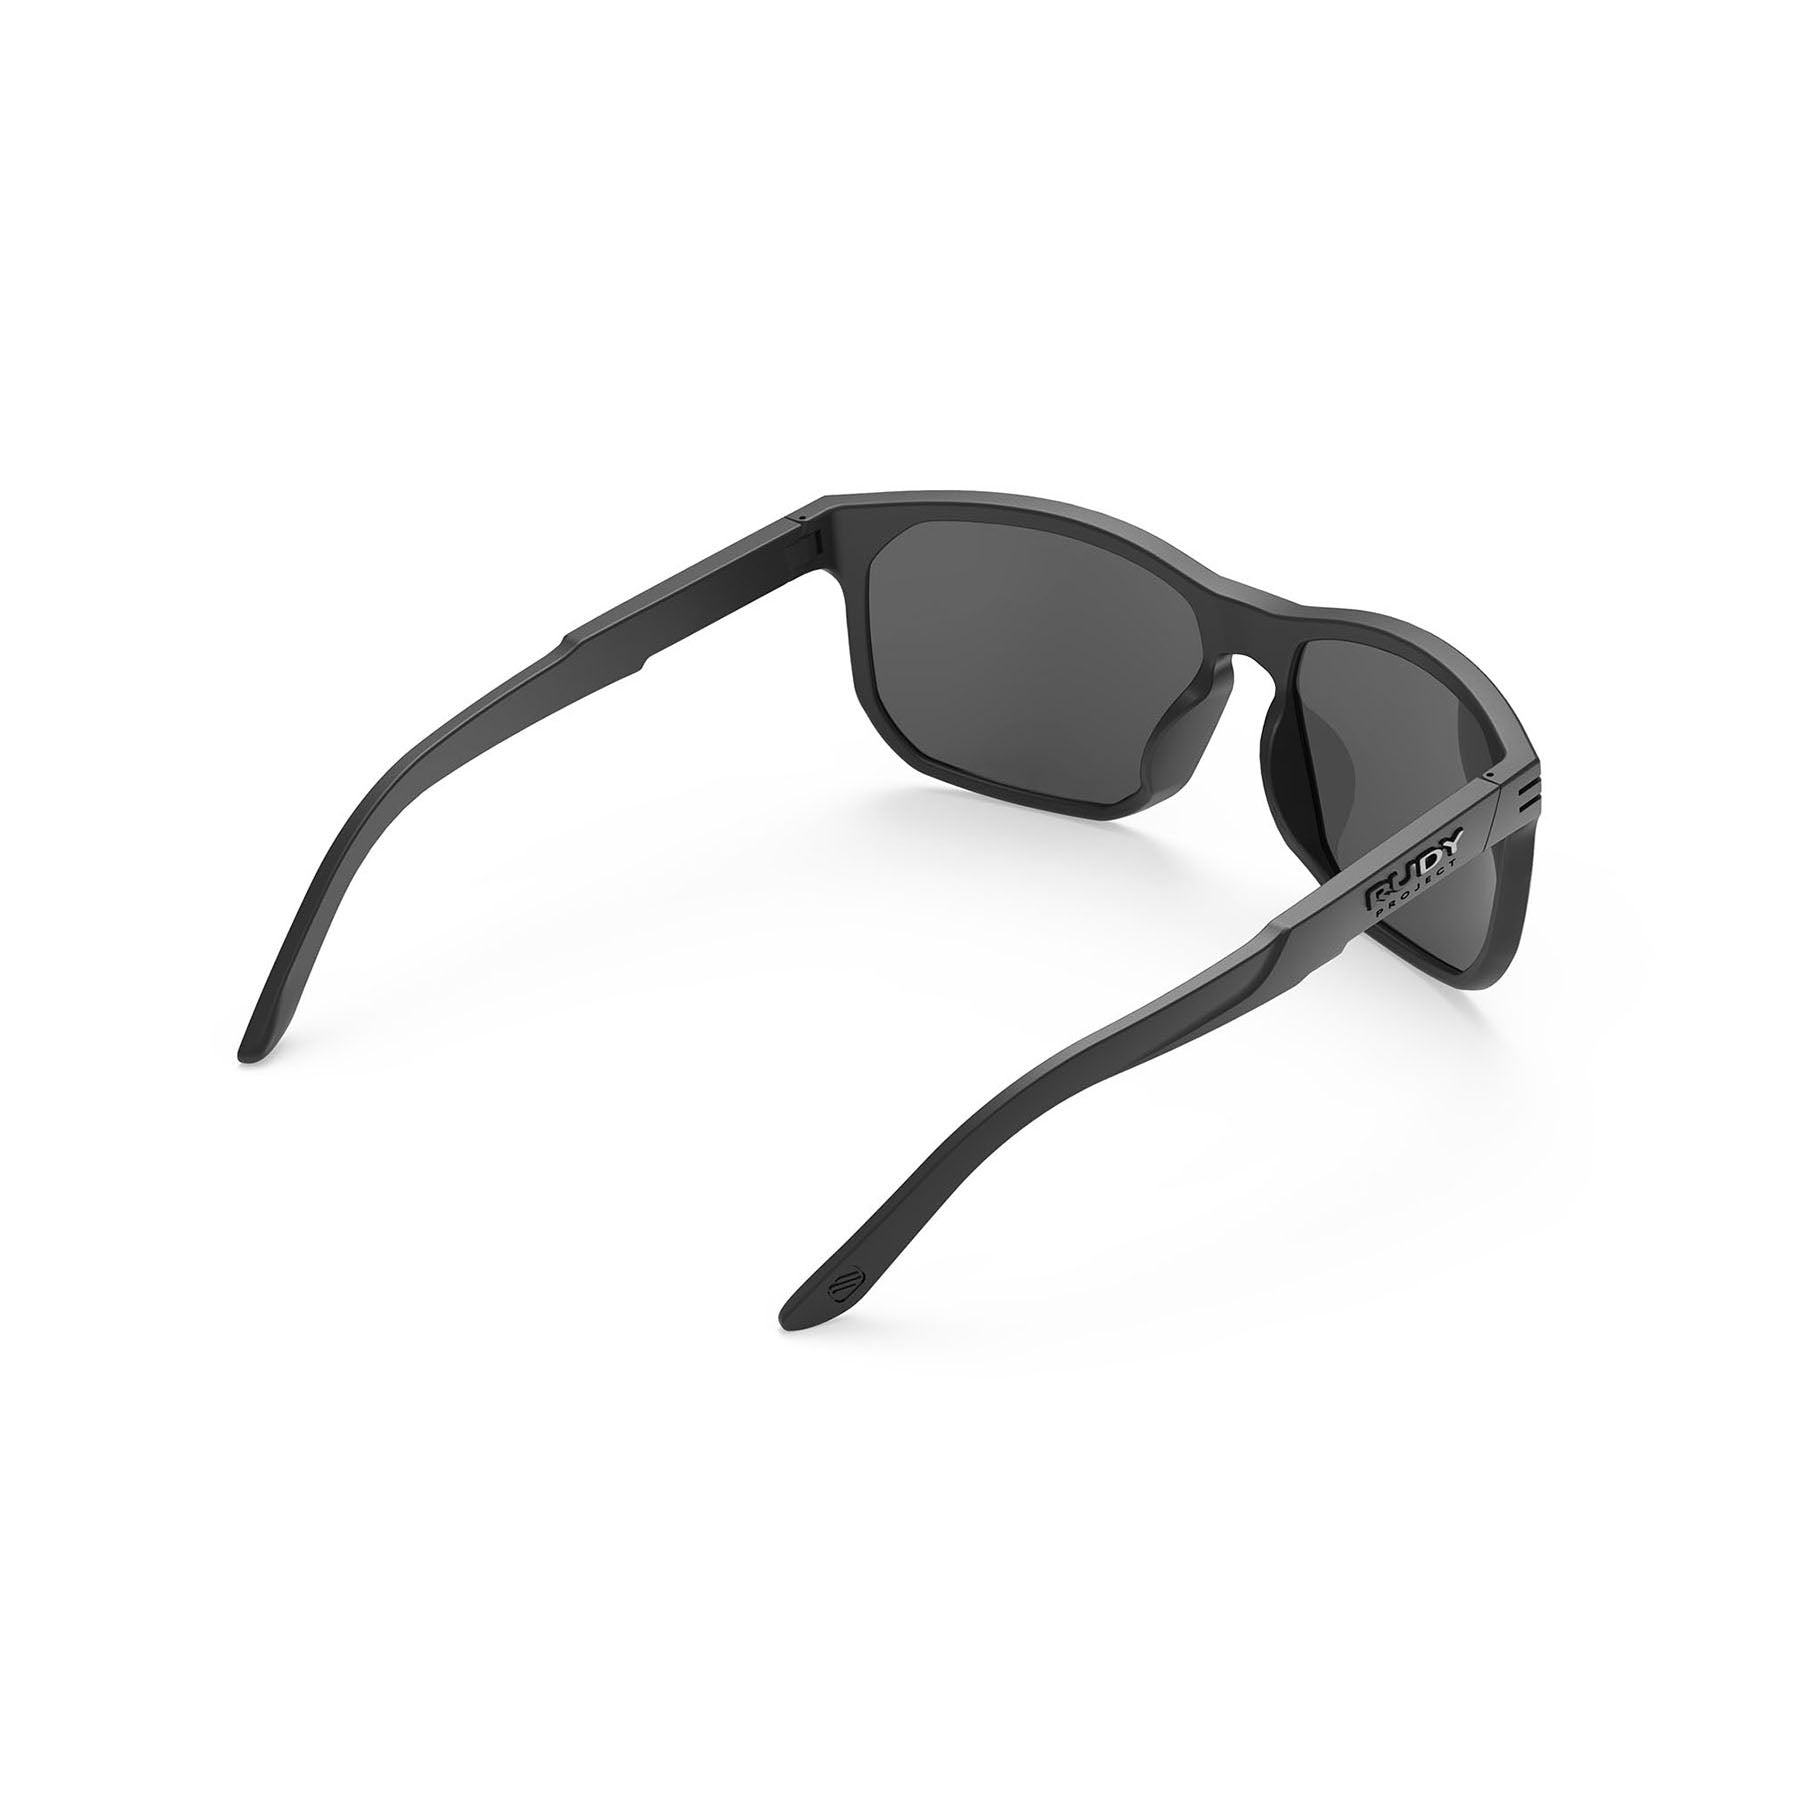 Rudy Project Soundrise lifestyle and beach prescription sunglasses#color_soundrise-black-matte-with-polar-3fx-grey-laser-lenses